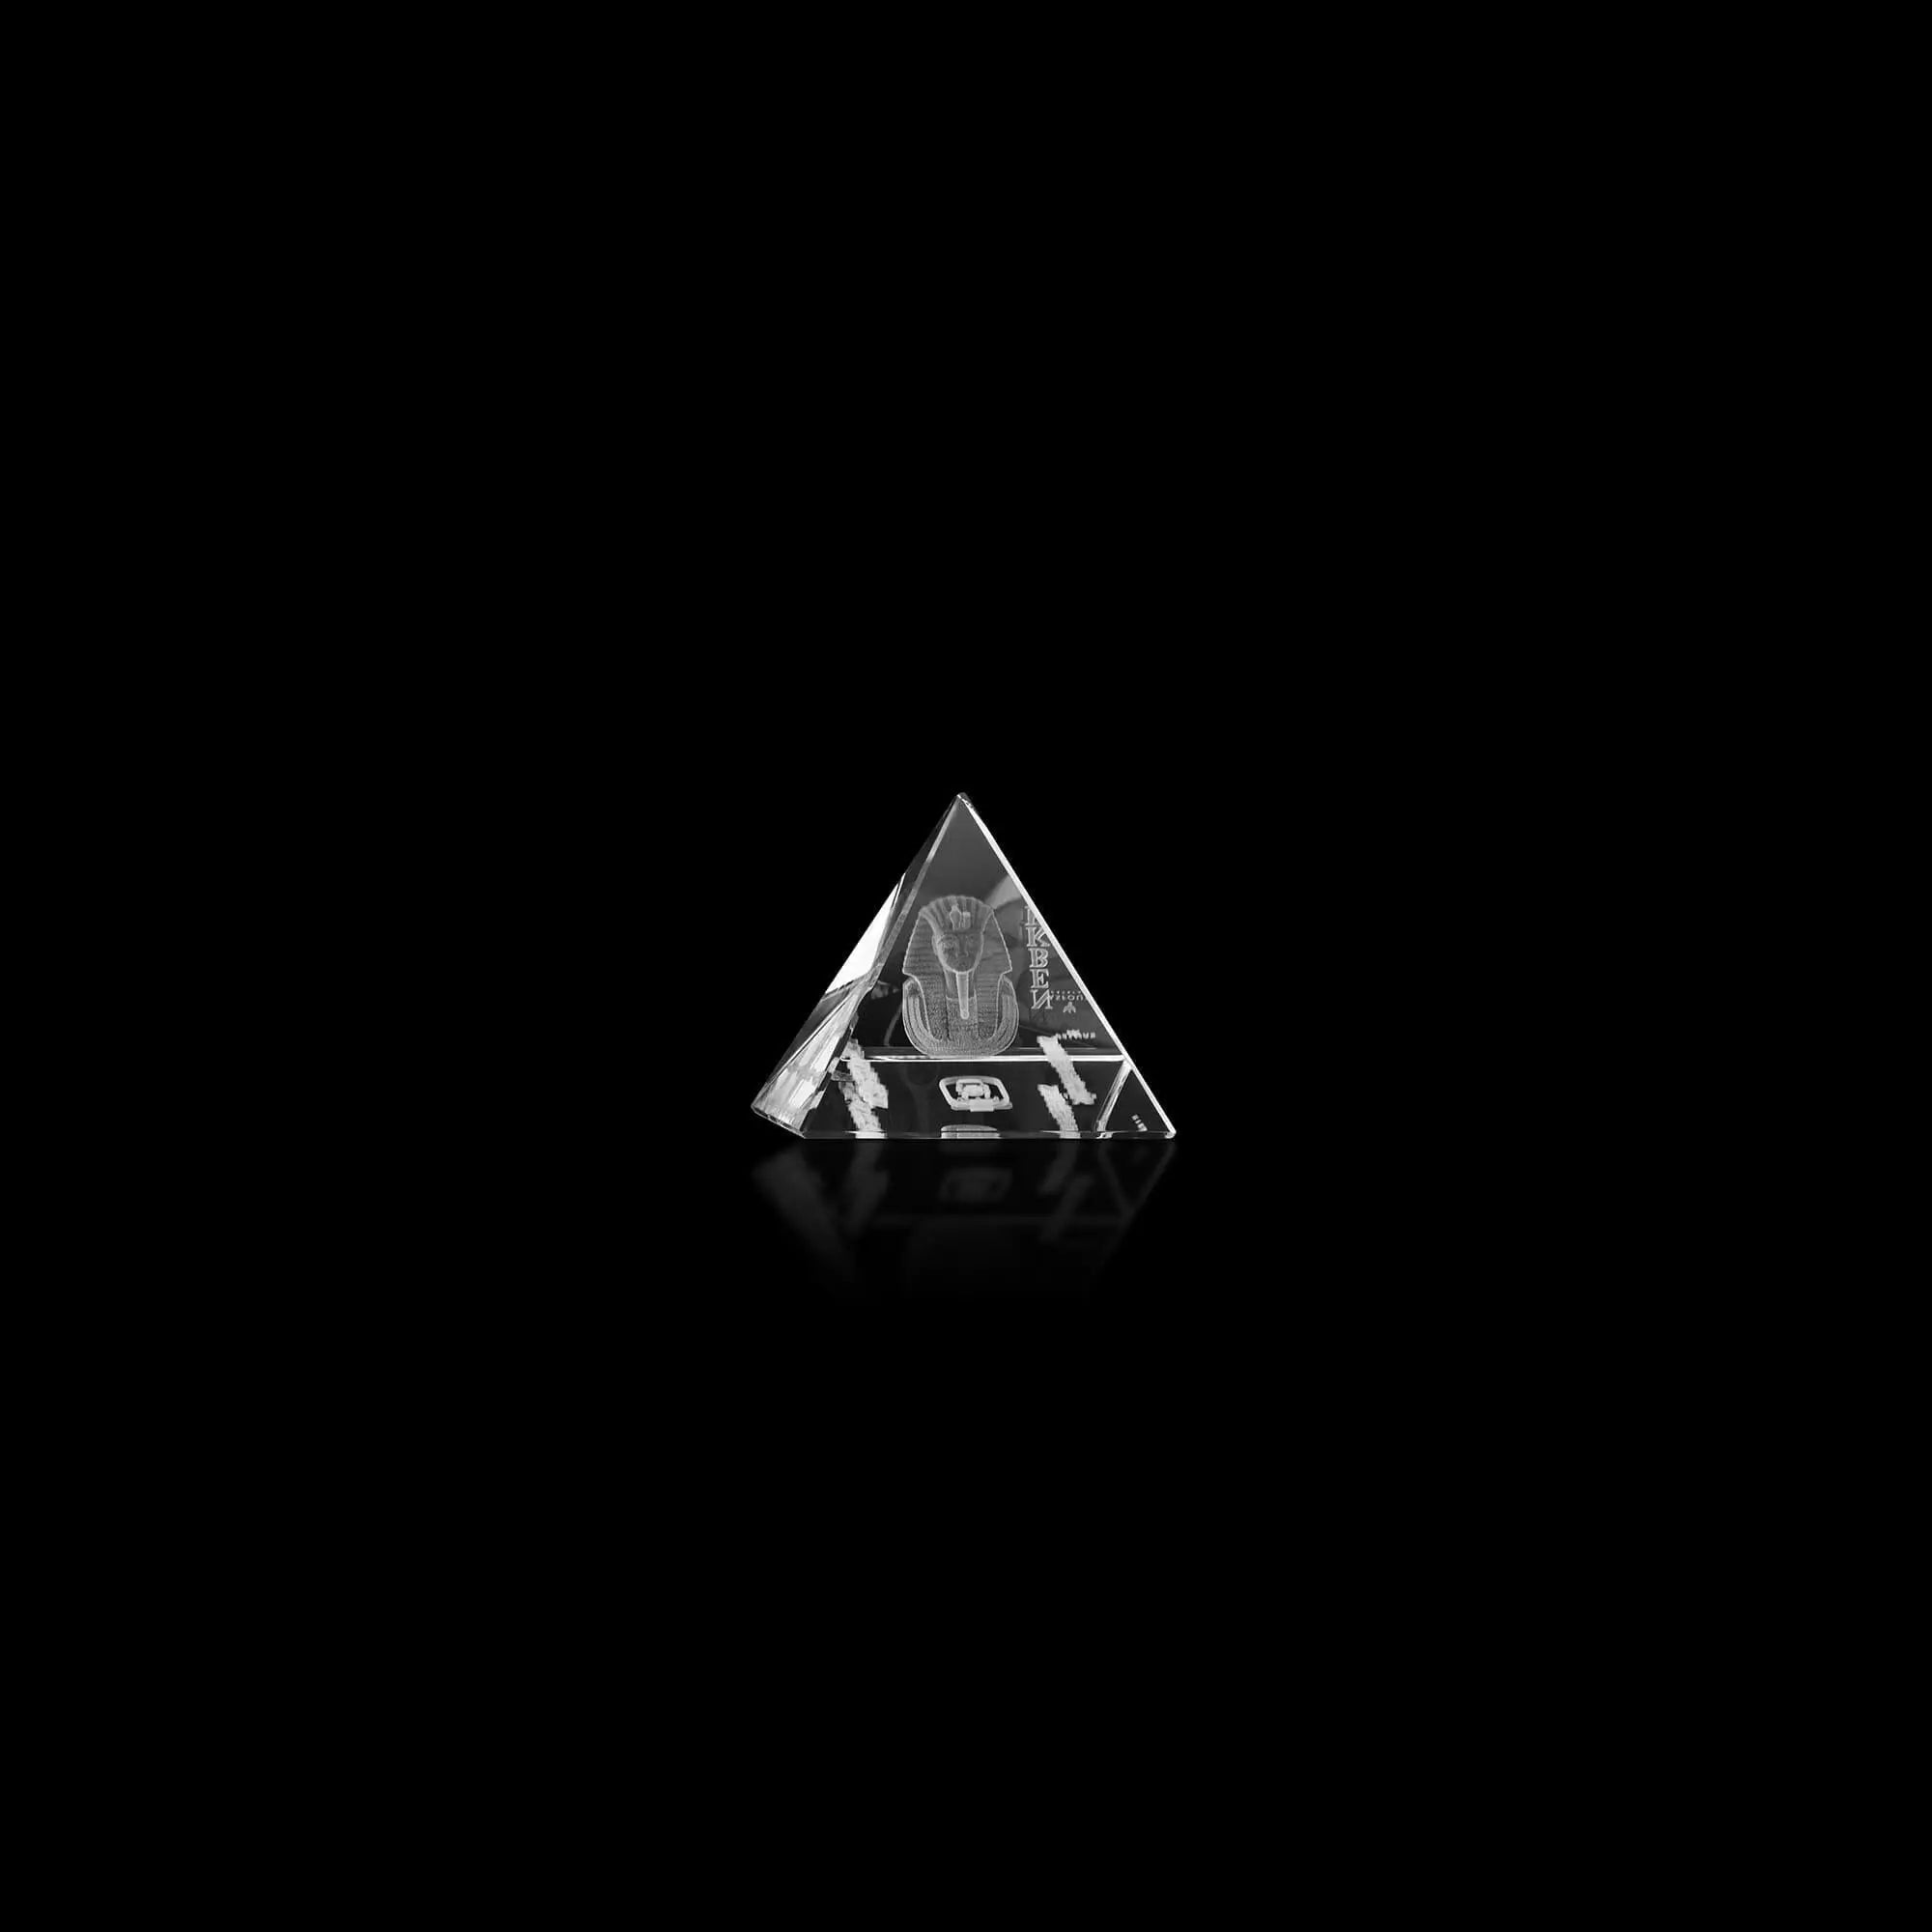 Pyramid Gift 3d Crystal King Tut - Asfour Crystal